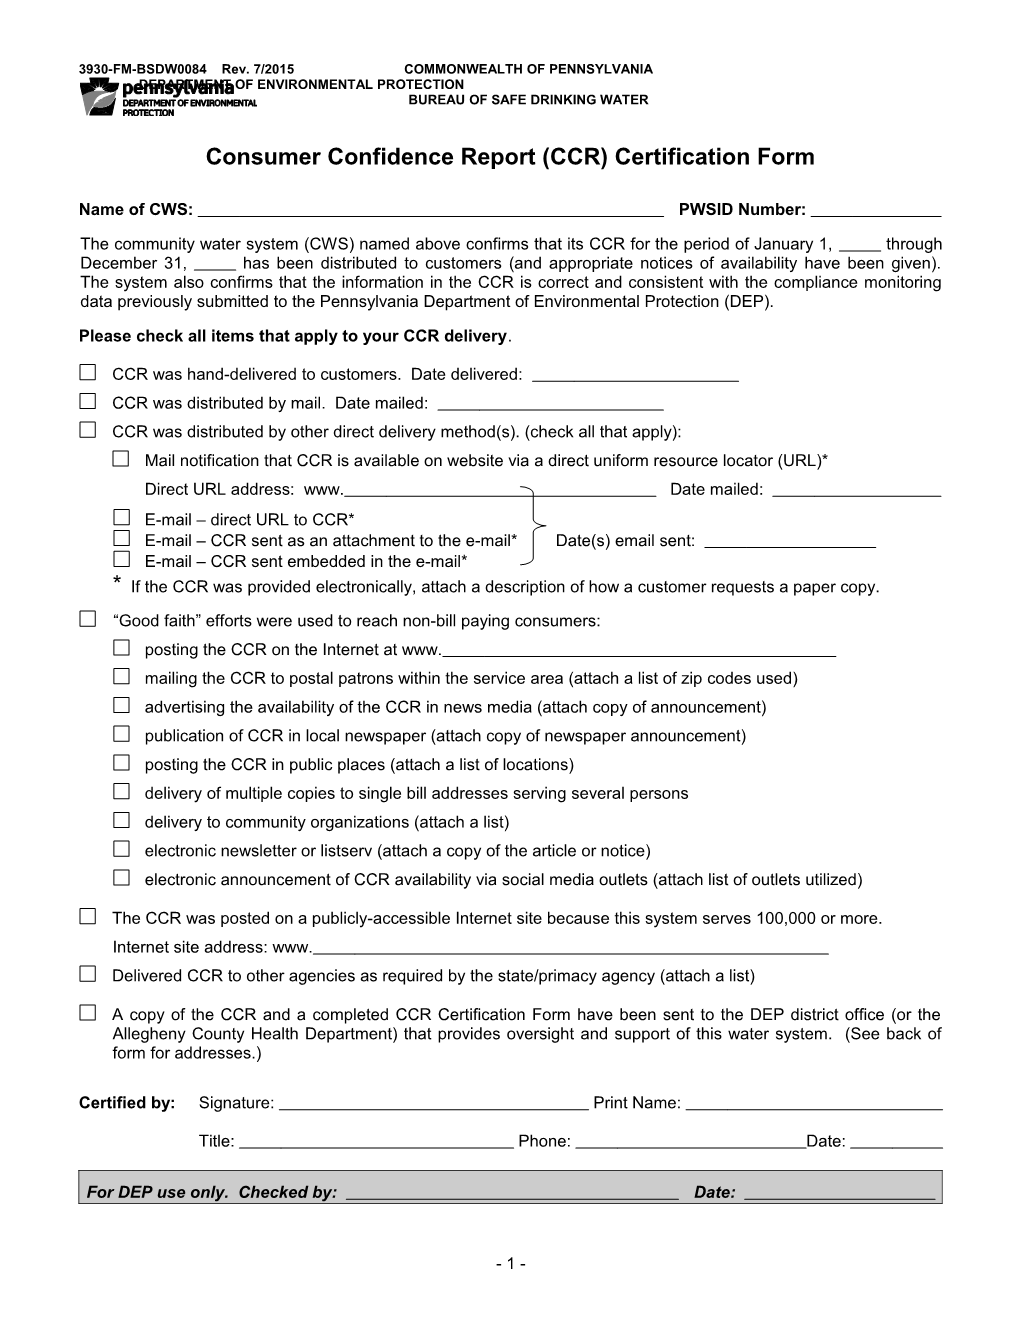 CCR Certification Form